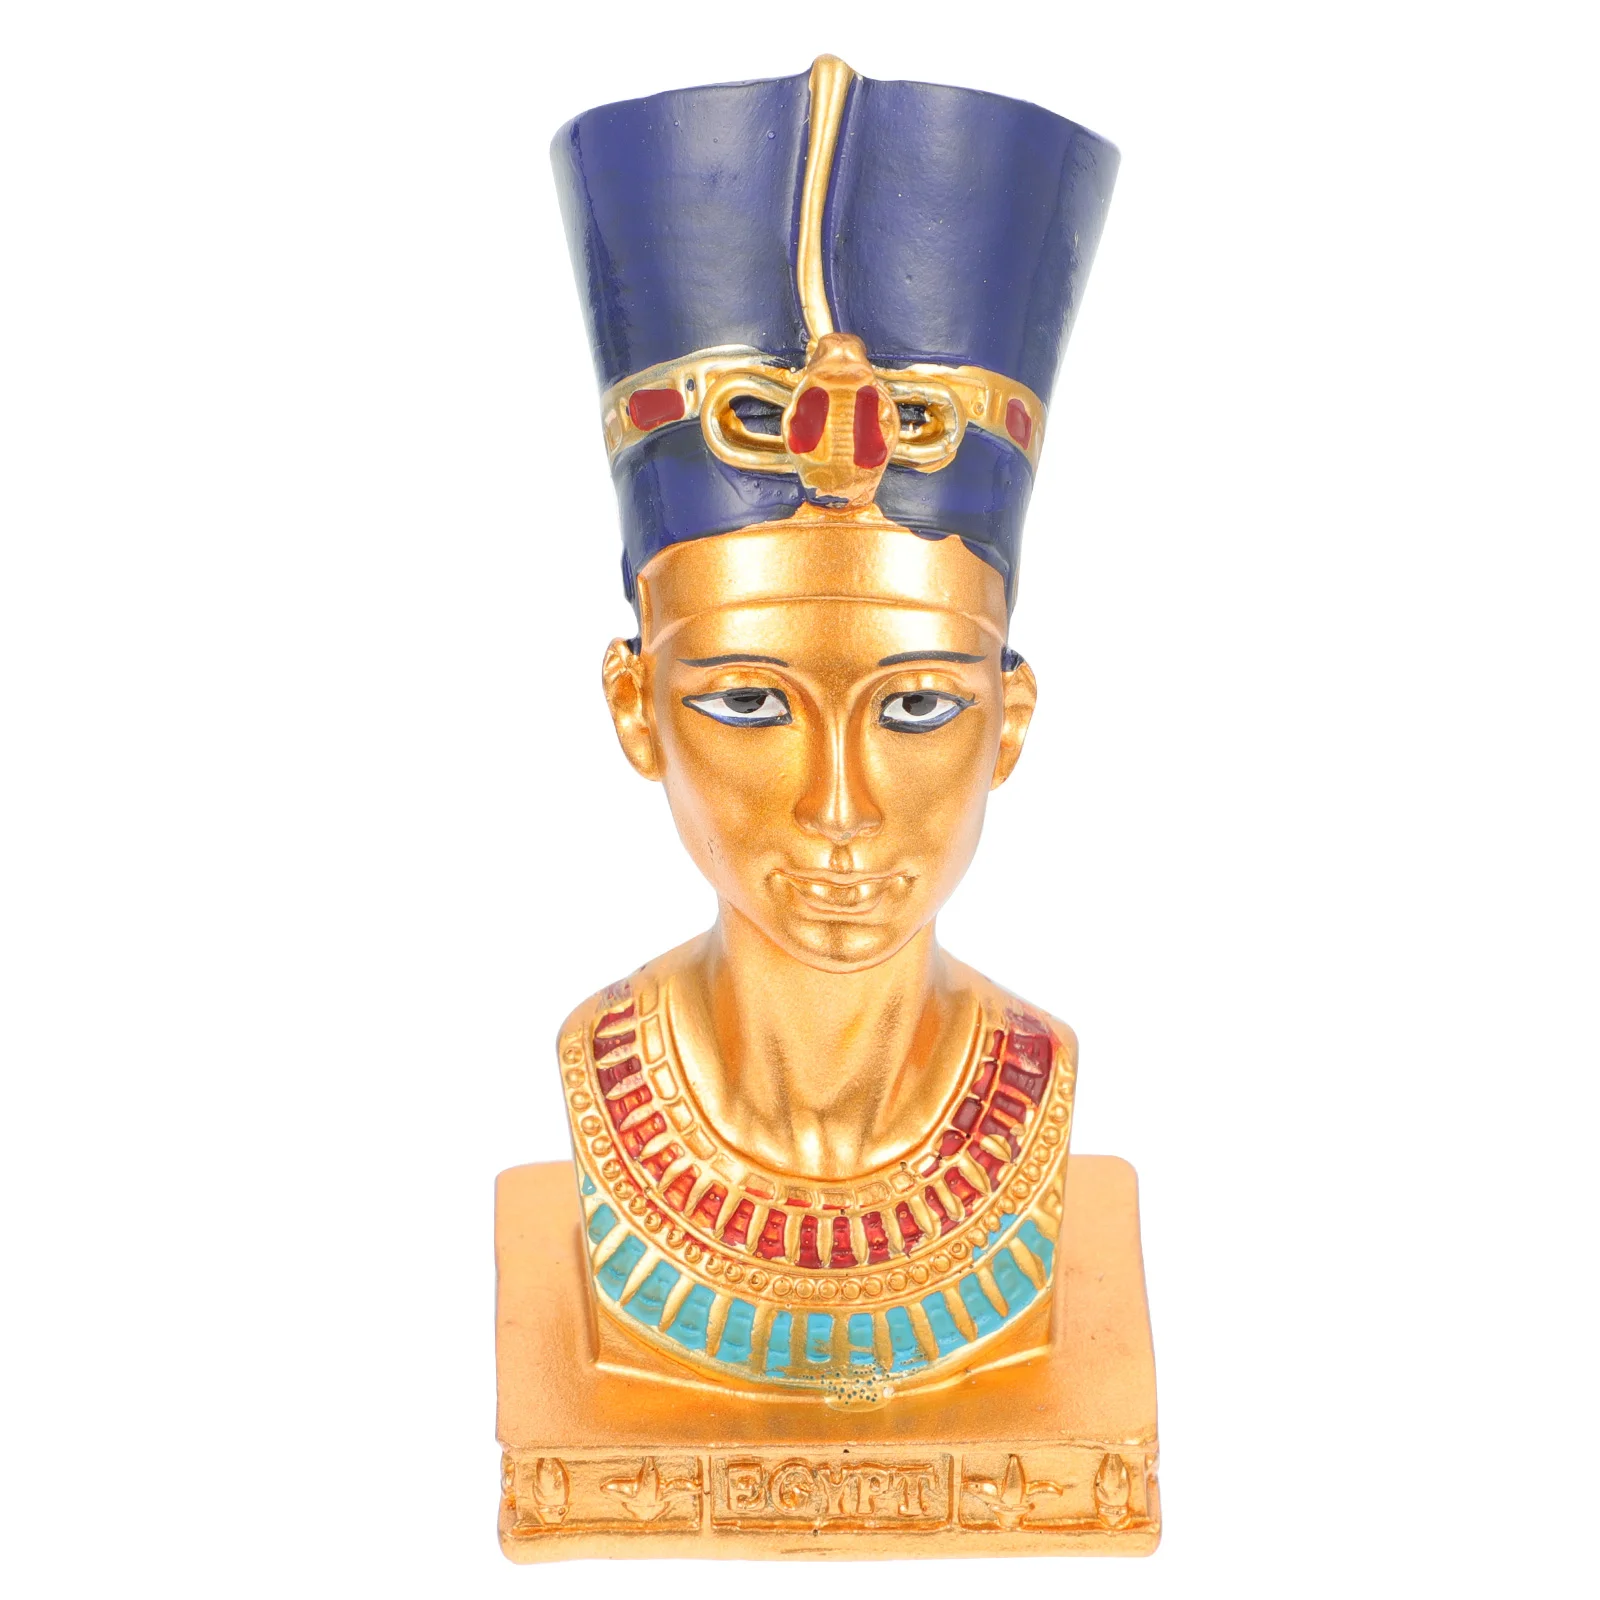 

Egyptian Statue Ancient Nefertiti Egypt Bust Ornament Adornment Figurine Sculpture Pharaoh Home Decor Desktop Figurines Resin